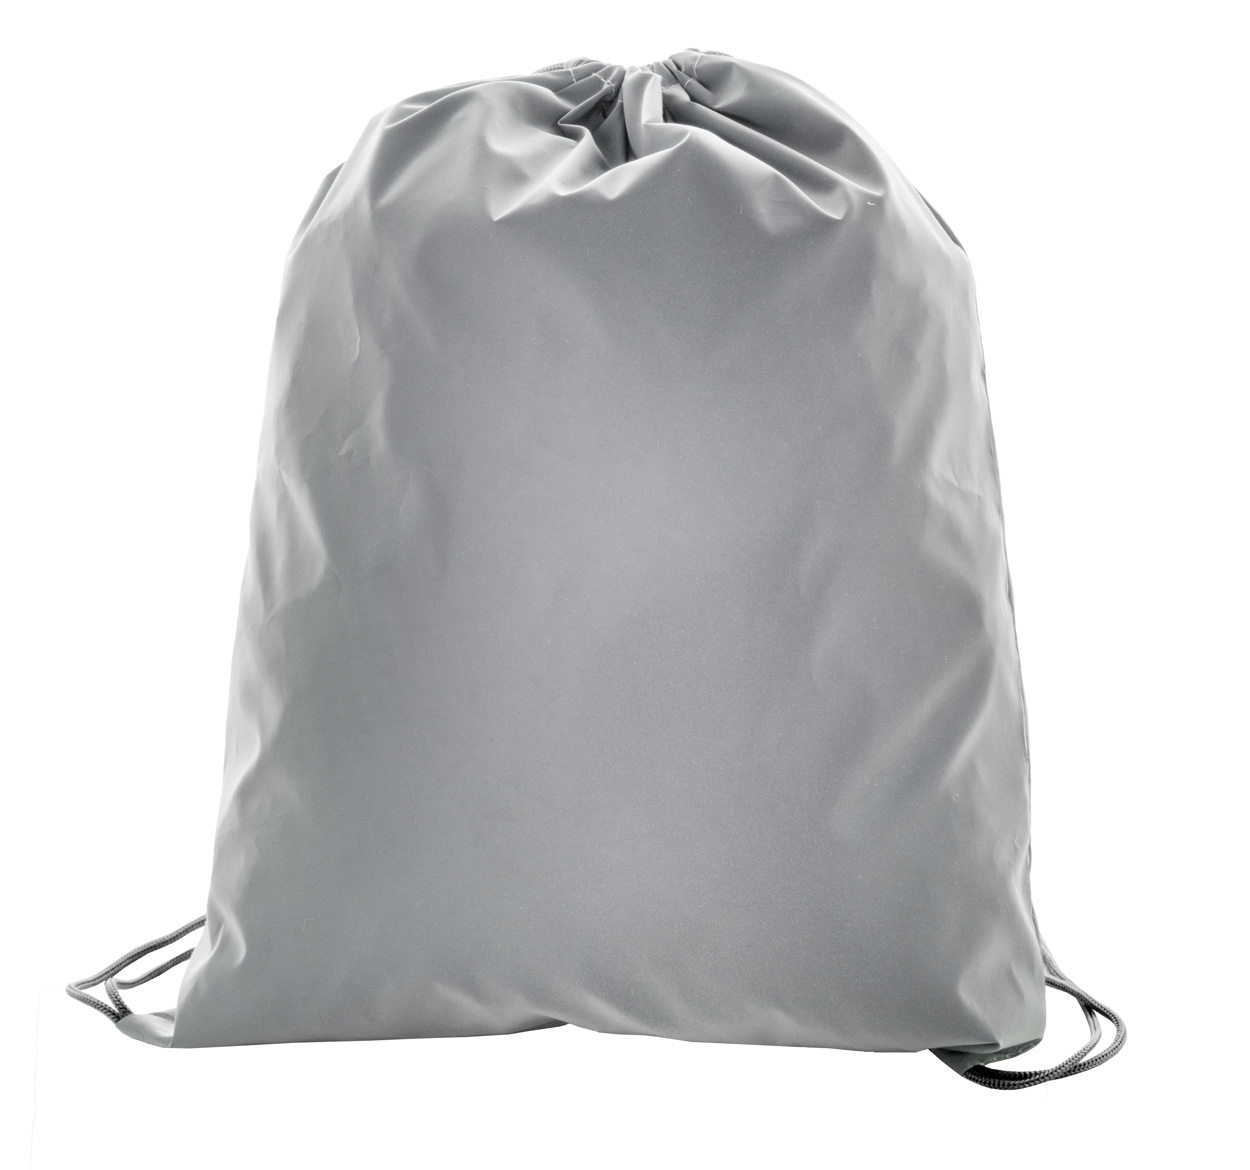 Lightyear reflective drawstring bag